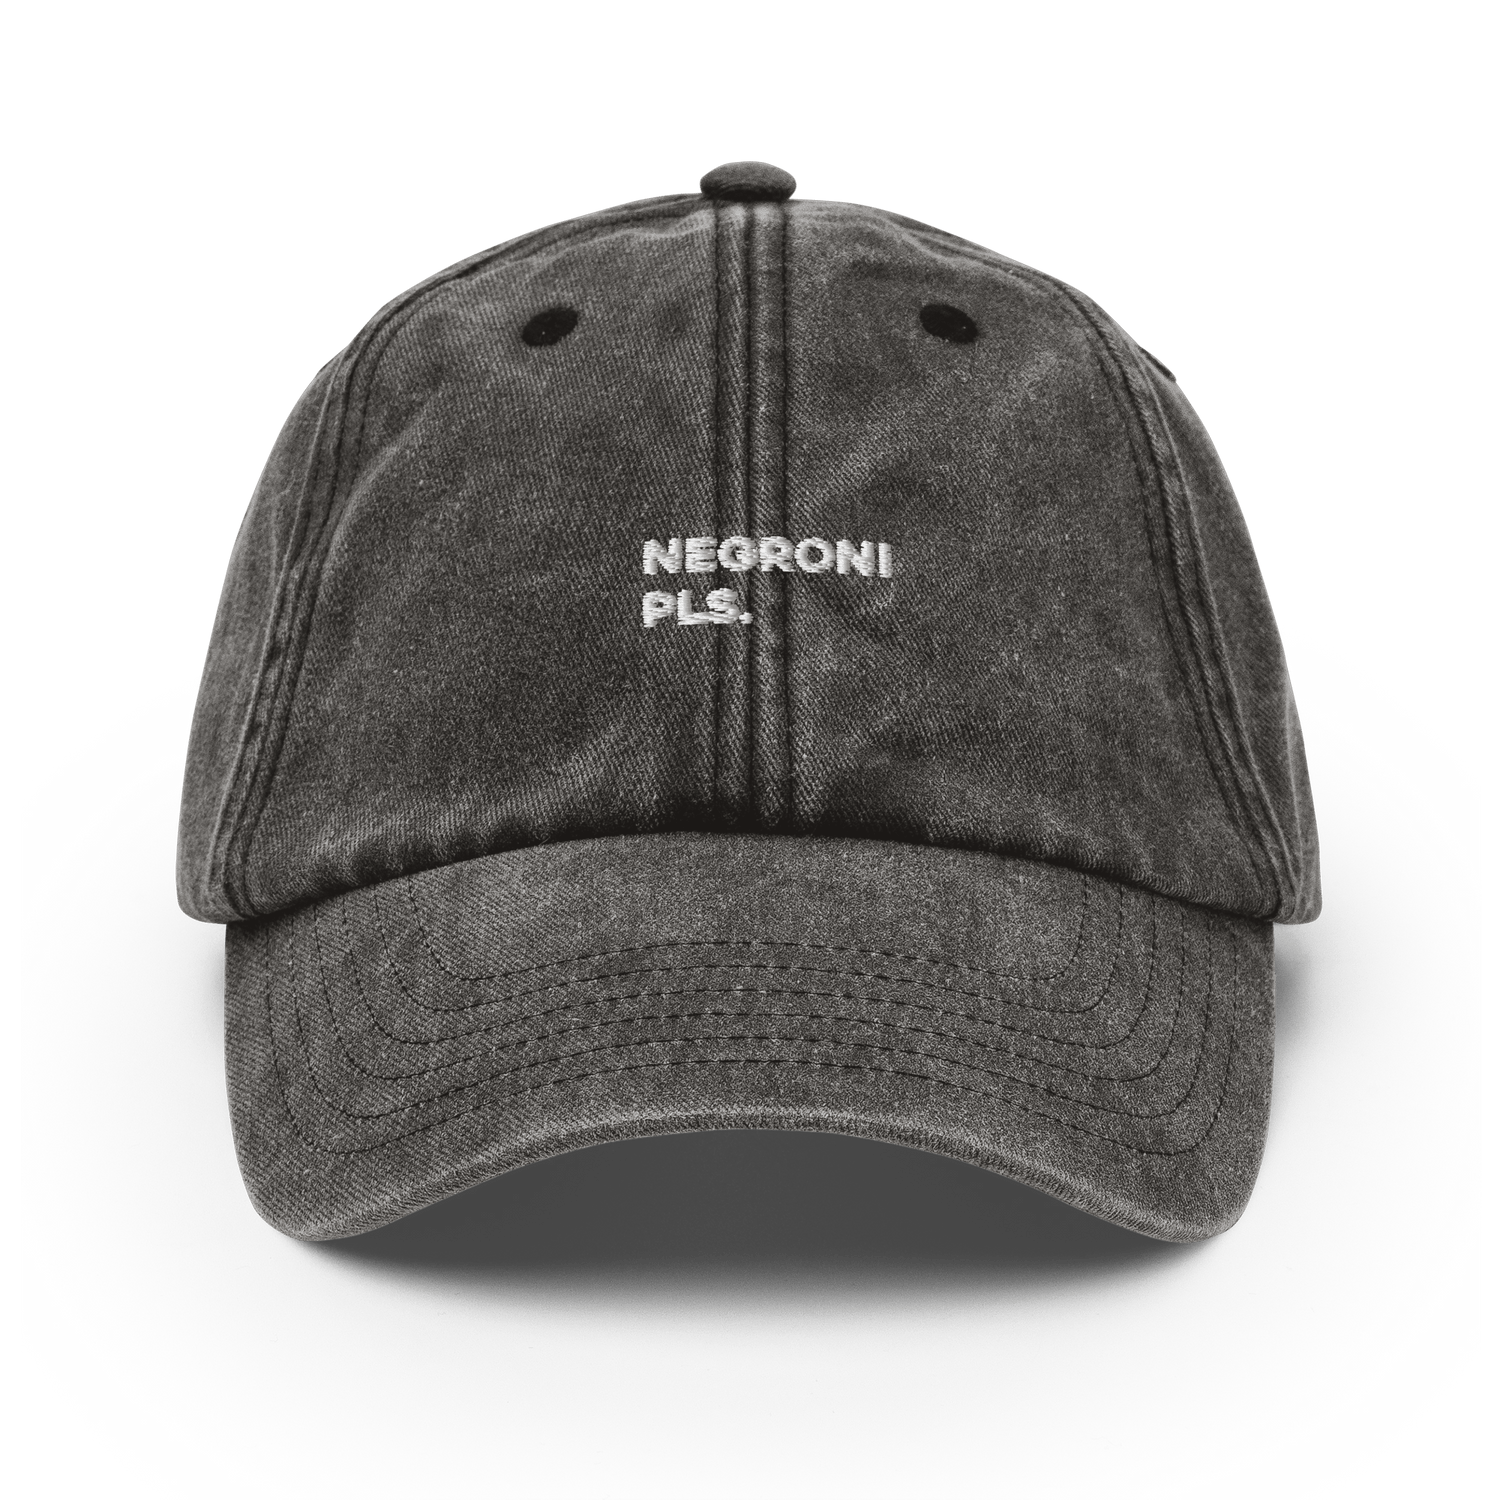 The Negroni Pls. Vintage Hat